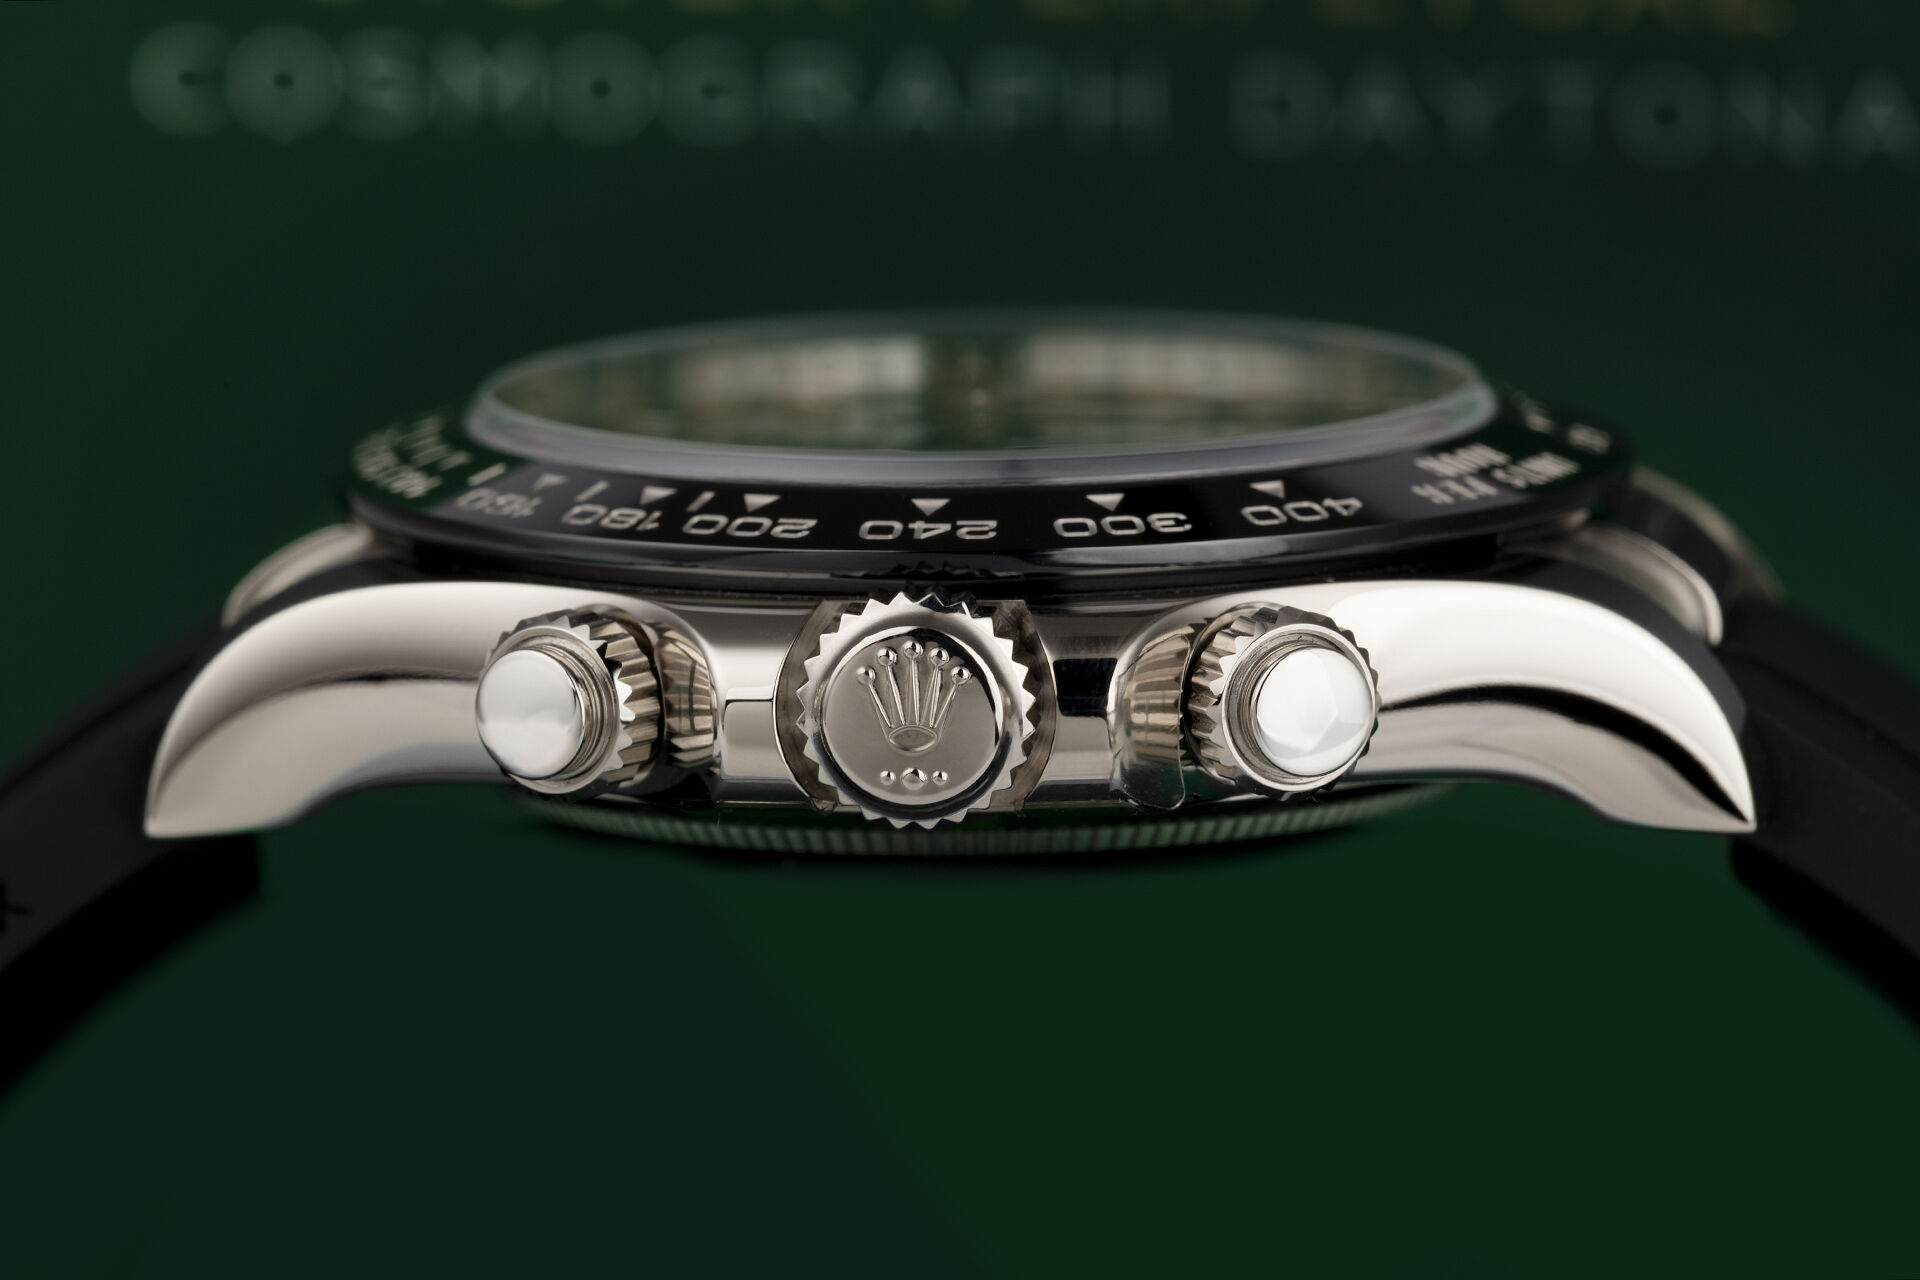 ref 116519LN | Rolex Warranty to 2025 | Rolex Cosmograph Daytona